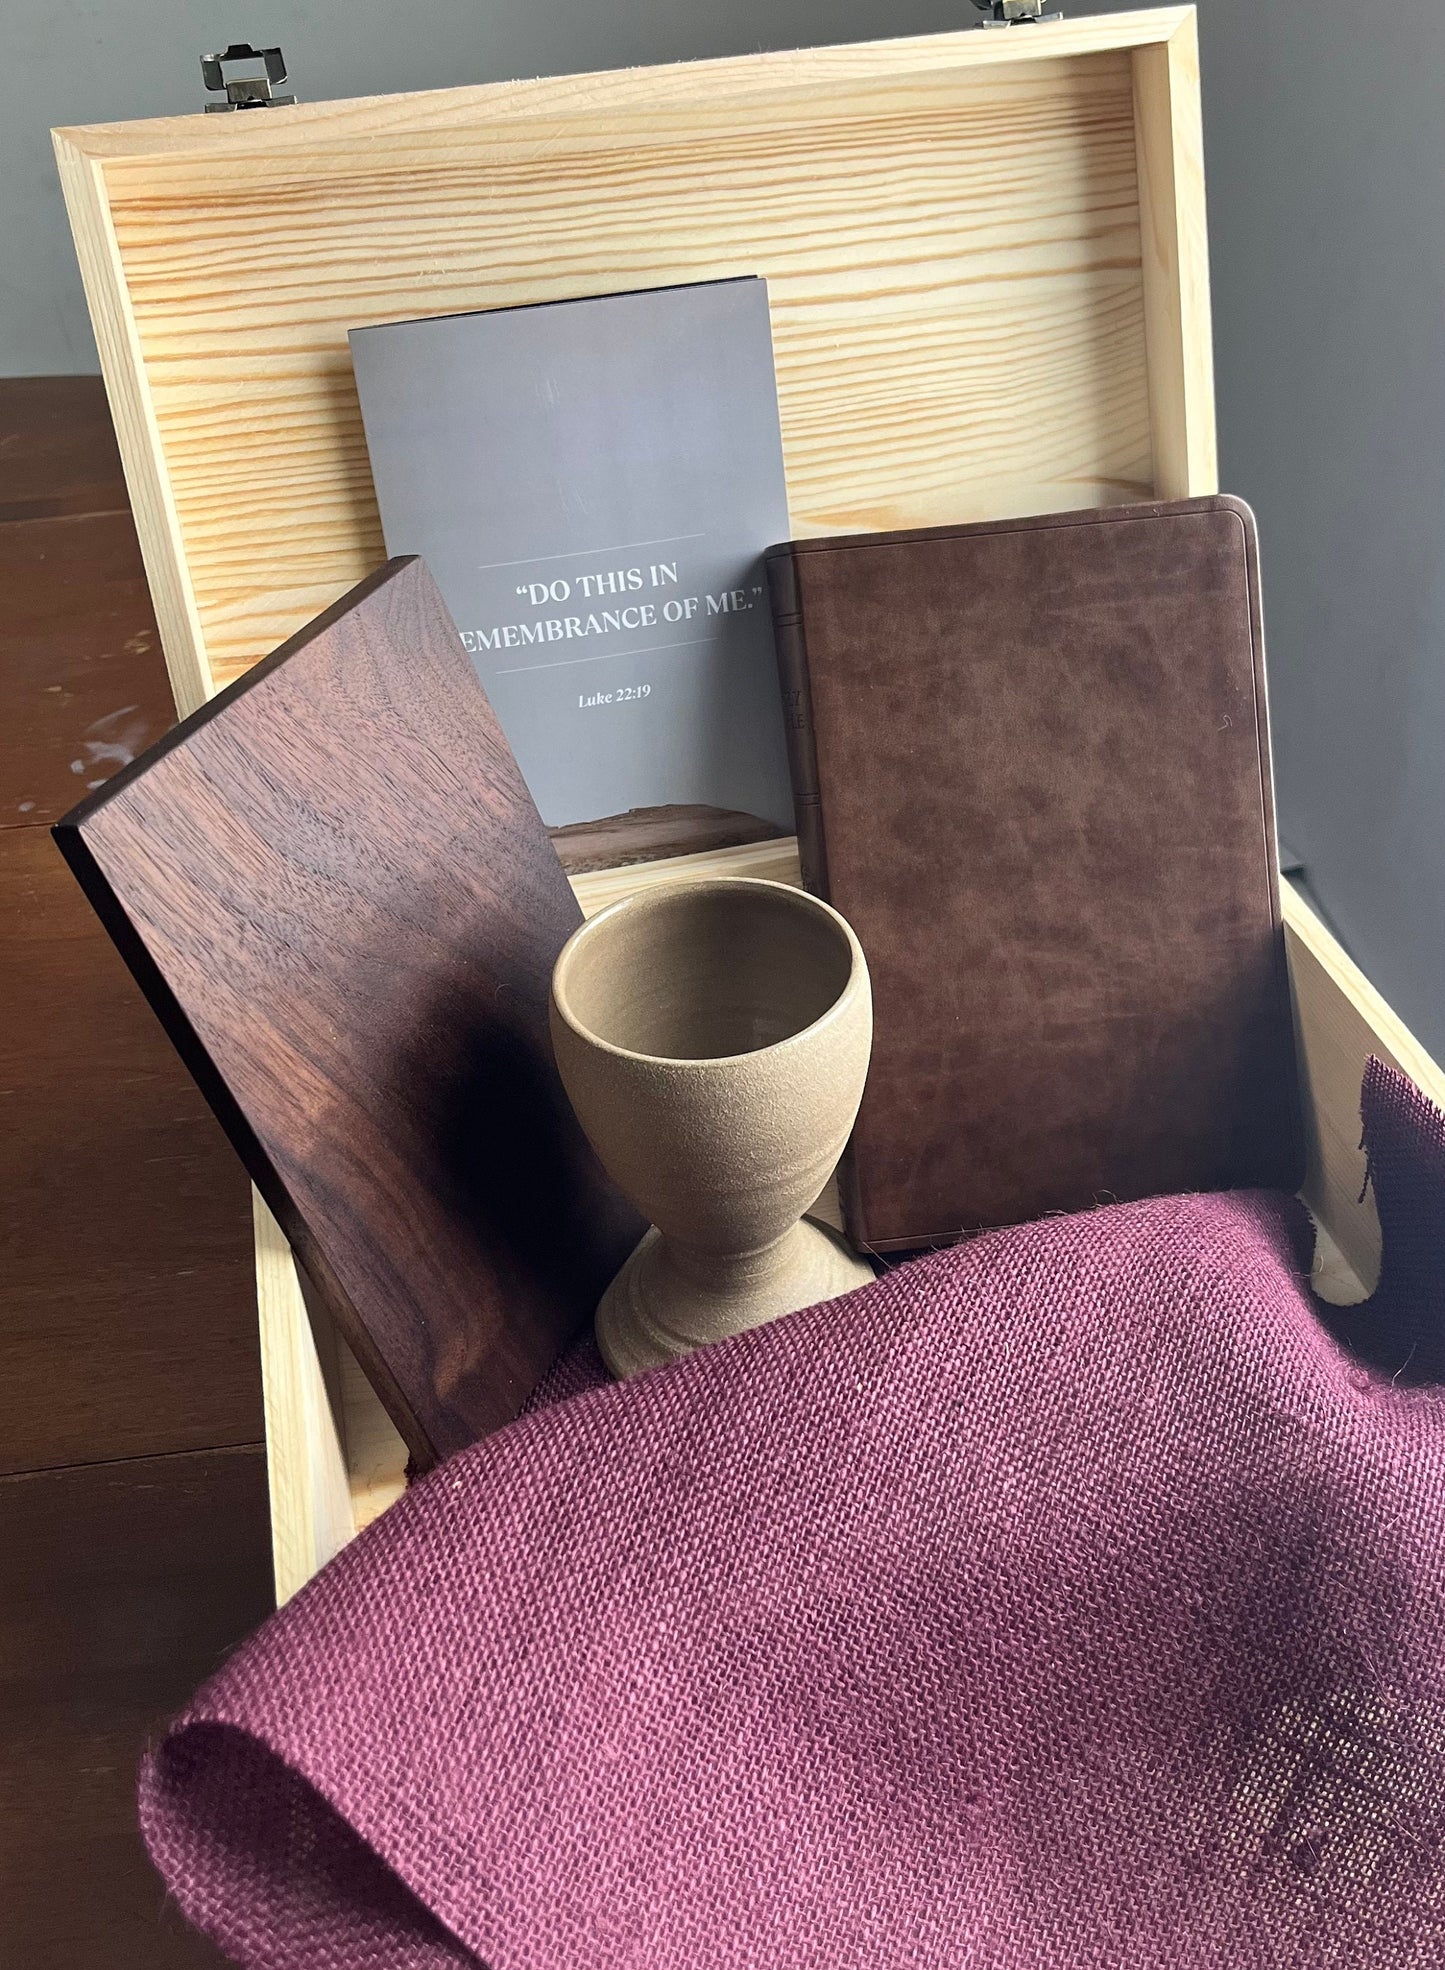 The Chosen Inspired Communion Set - Personalized | Ceramic Chalice, Bible, burlap, Wood Platter, Case | First Century | Jesus Pottery